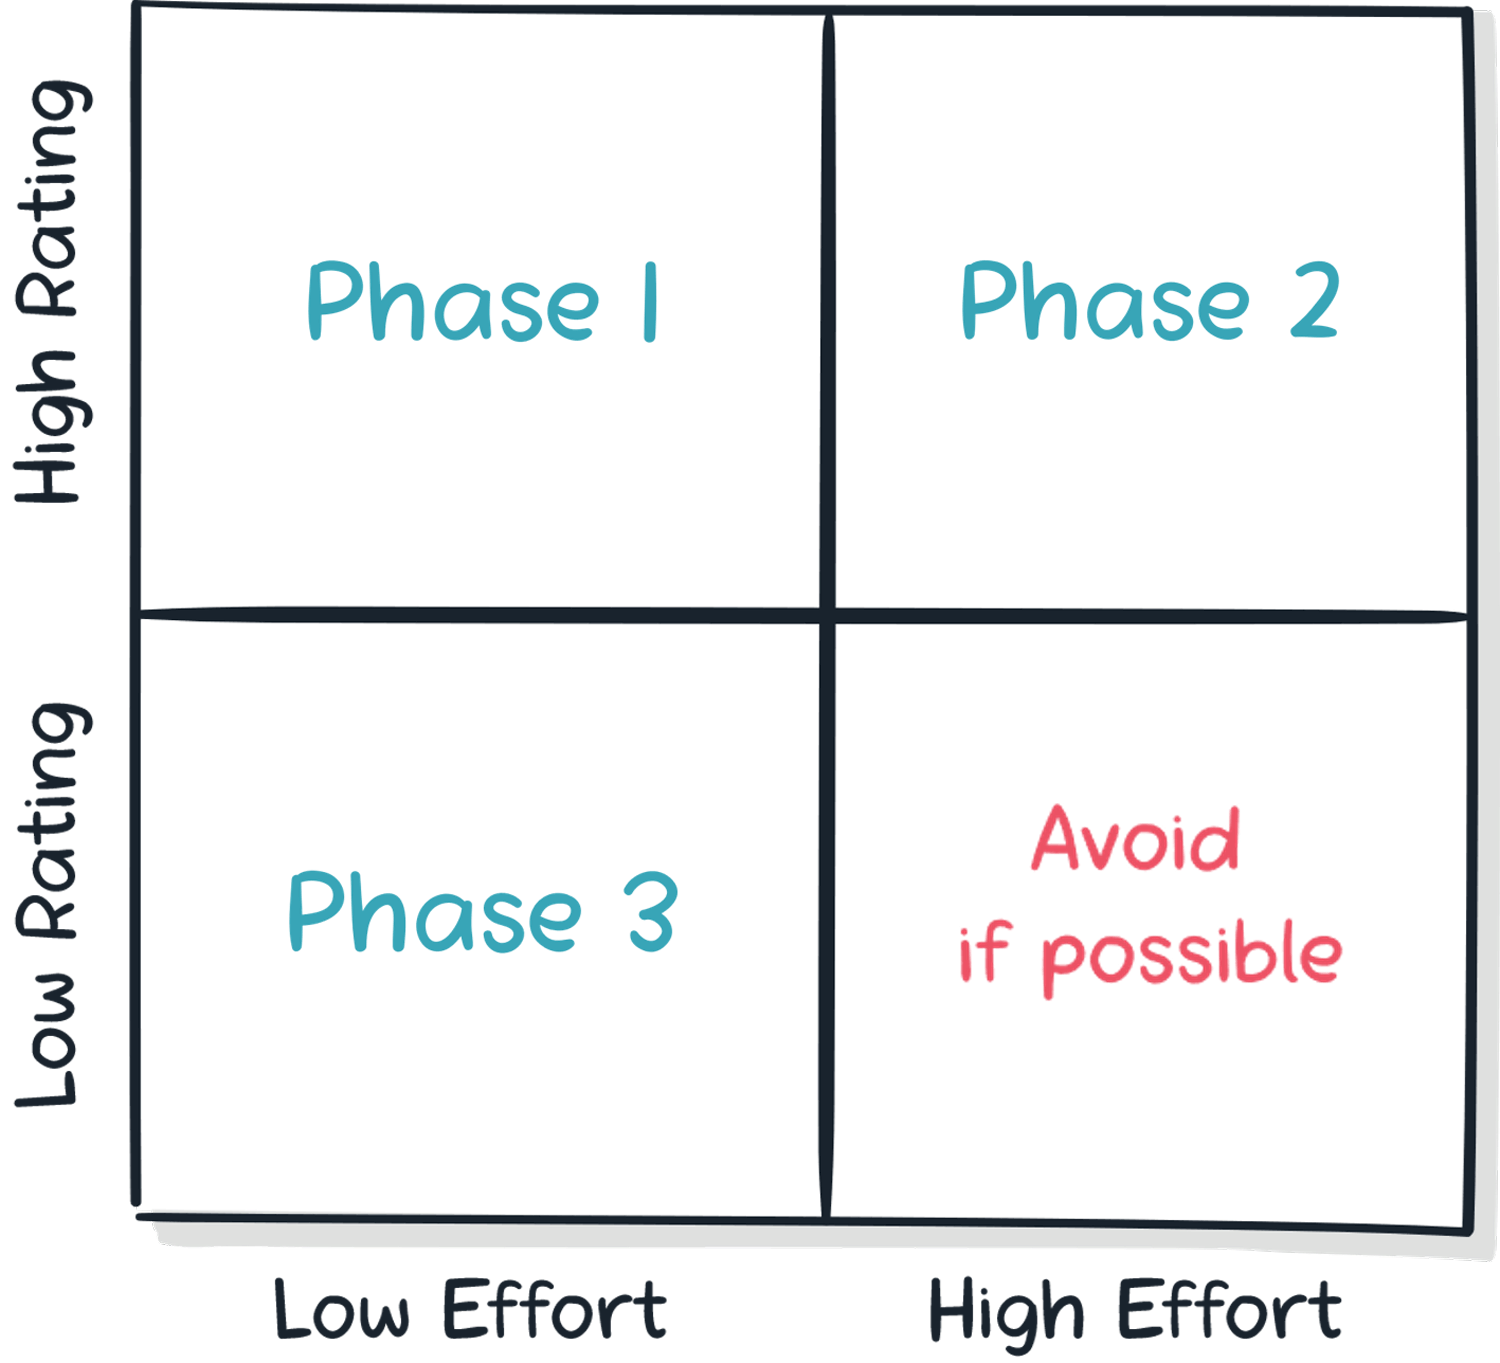 Figure 3 - Risk matrix